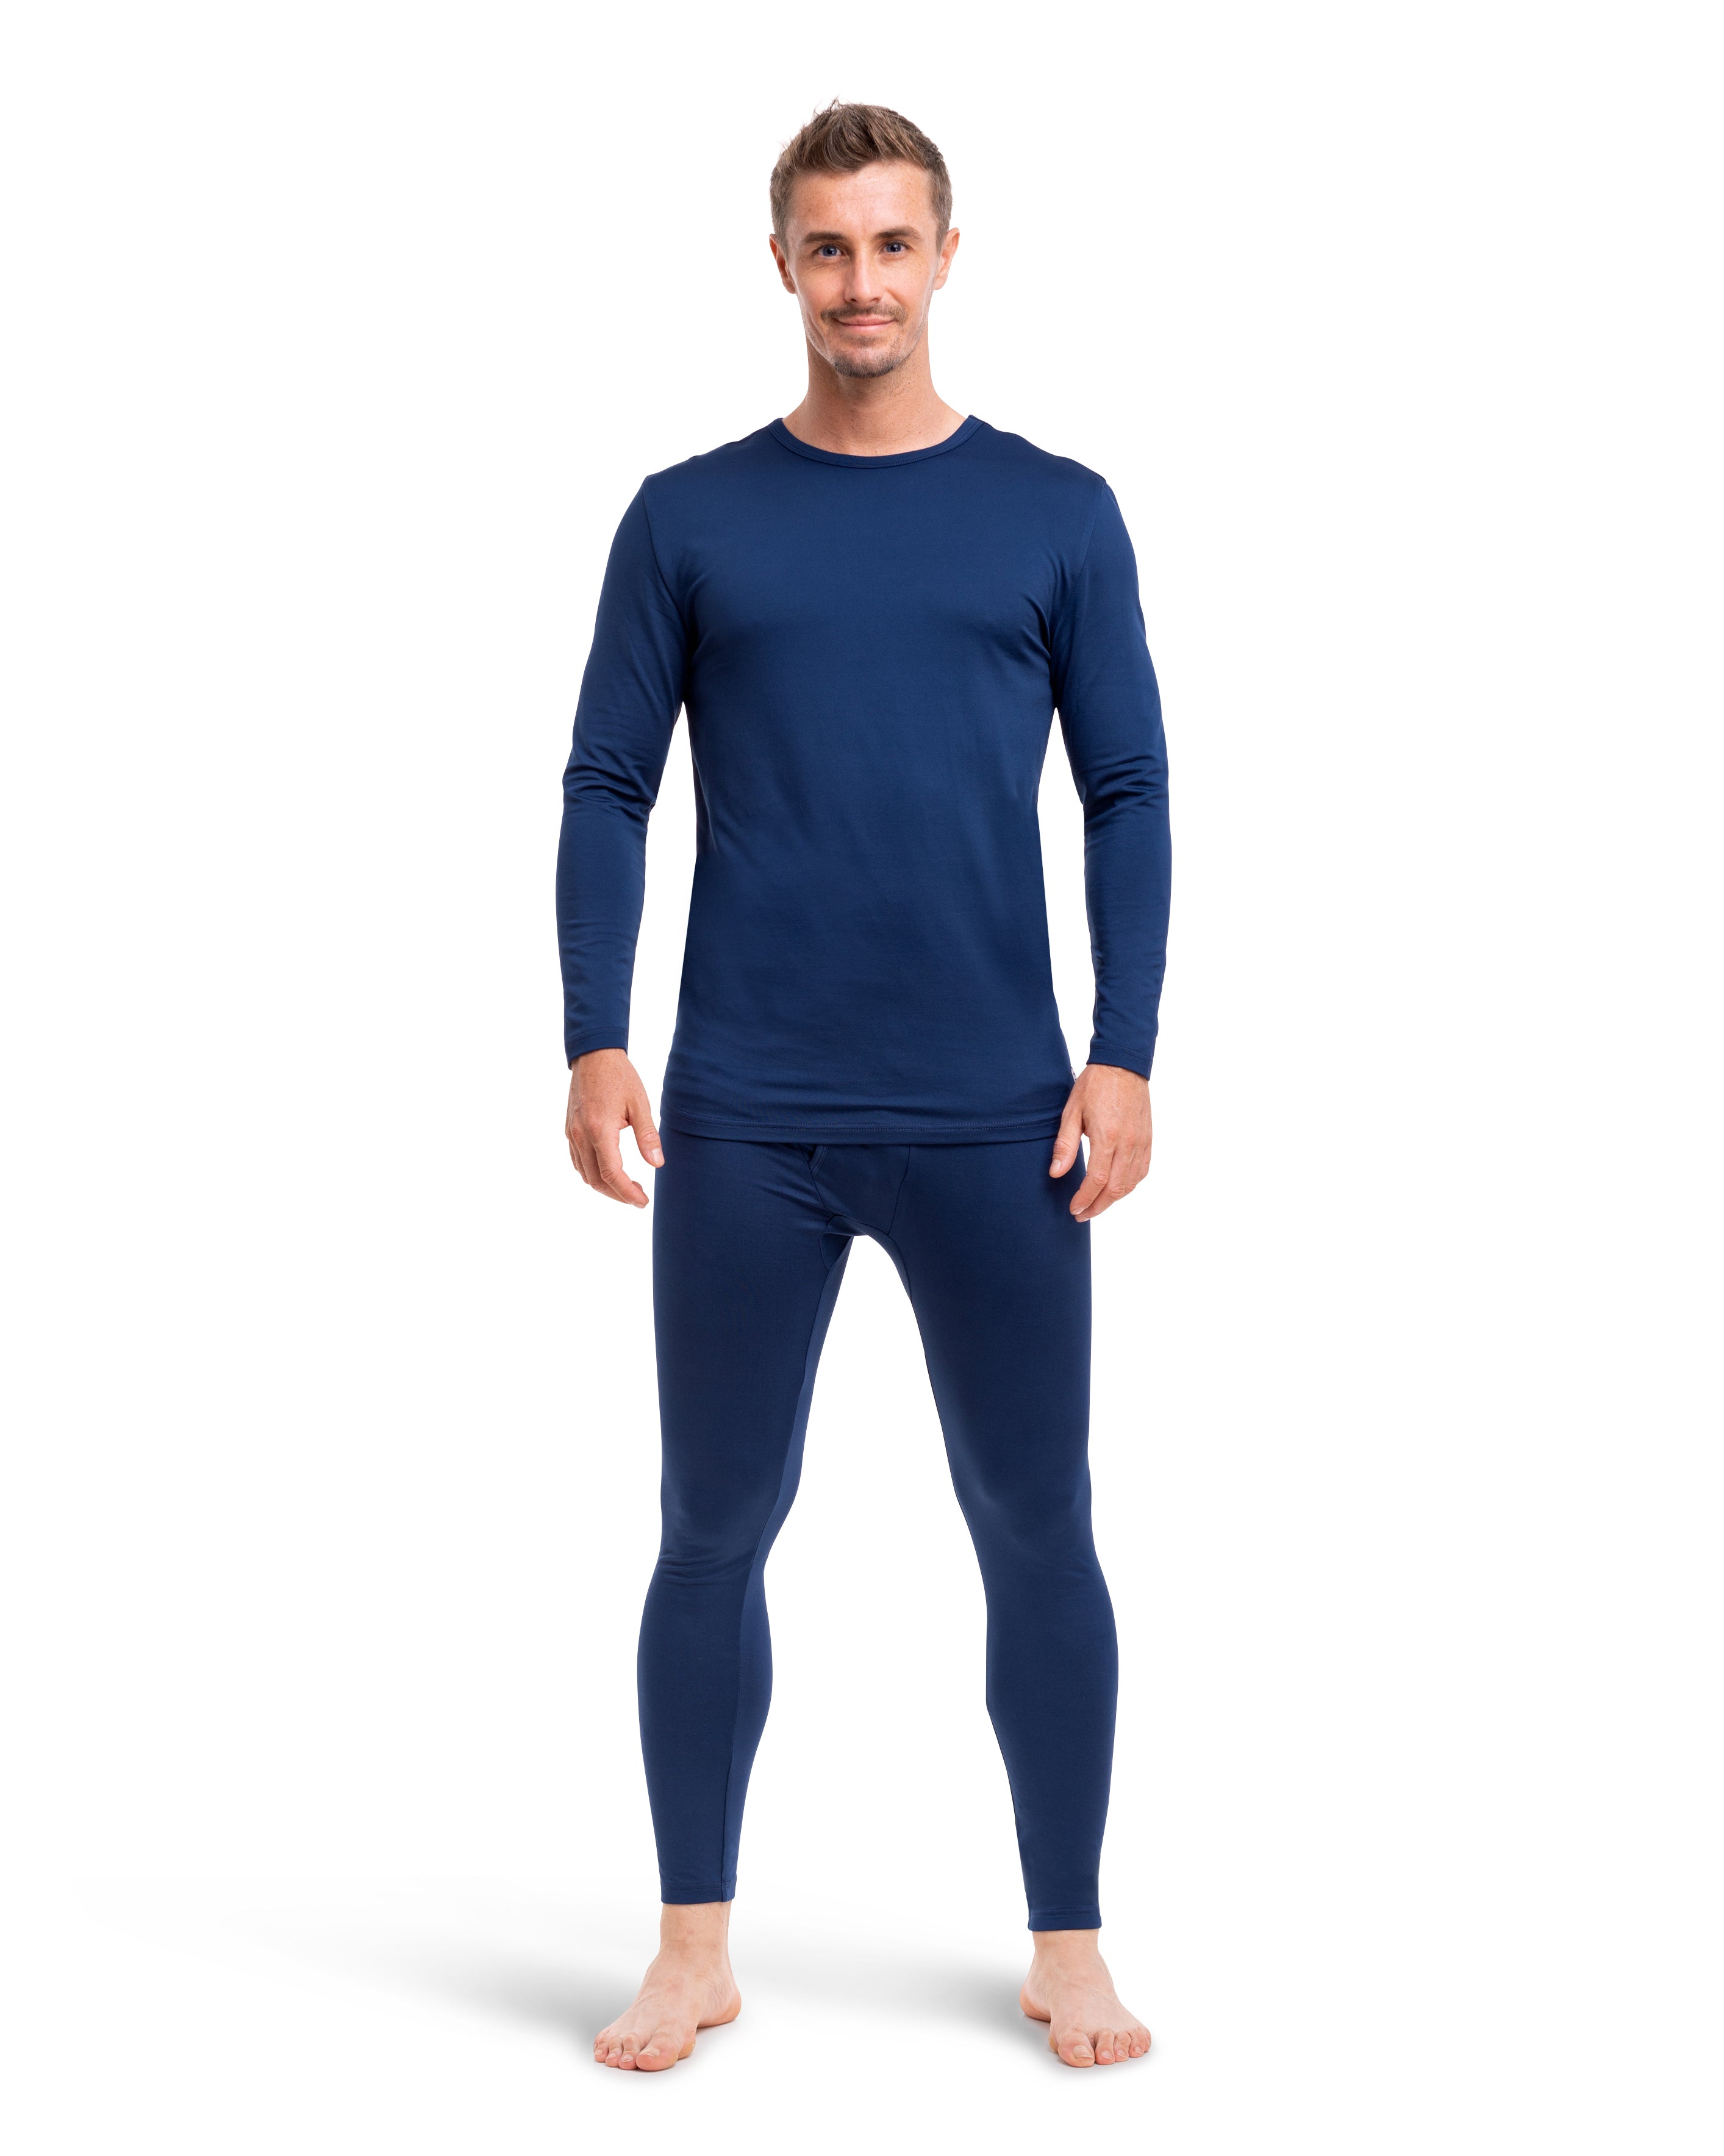 LAPASA Men's Thermal Underwear Set Soft Fleece Lined Long Johns